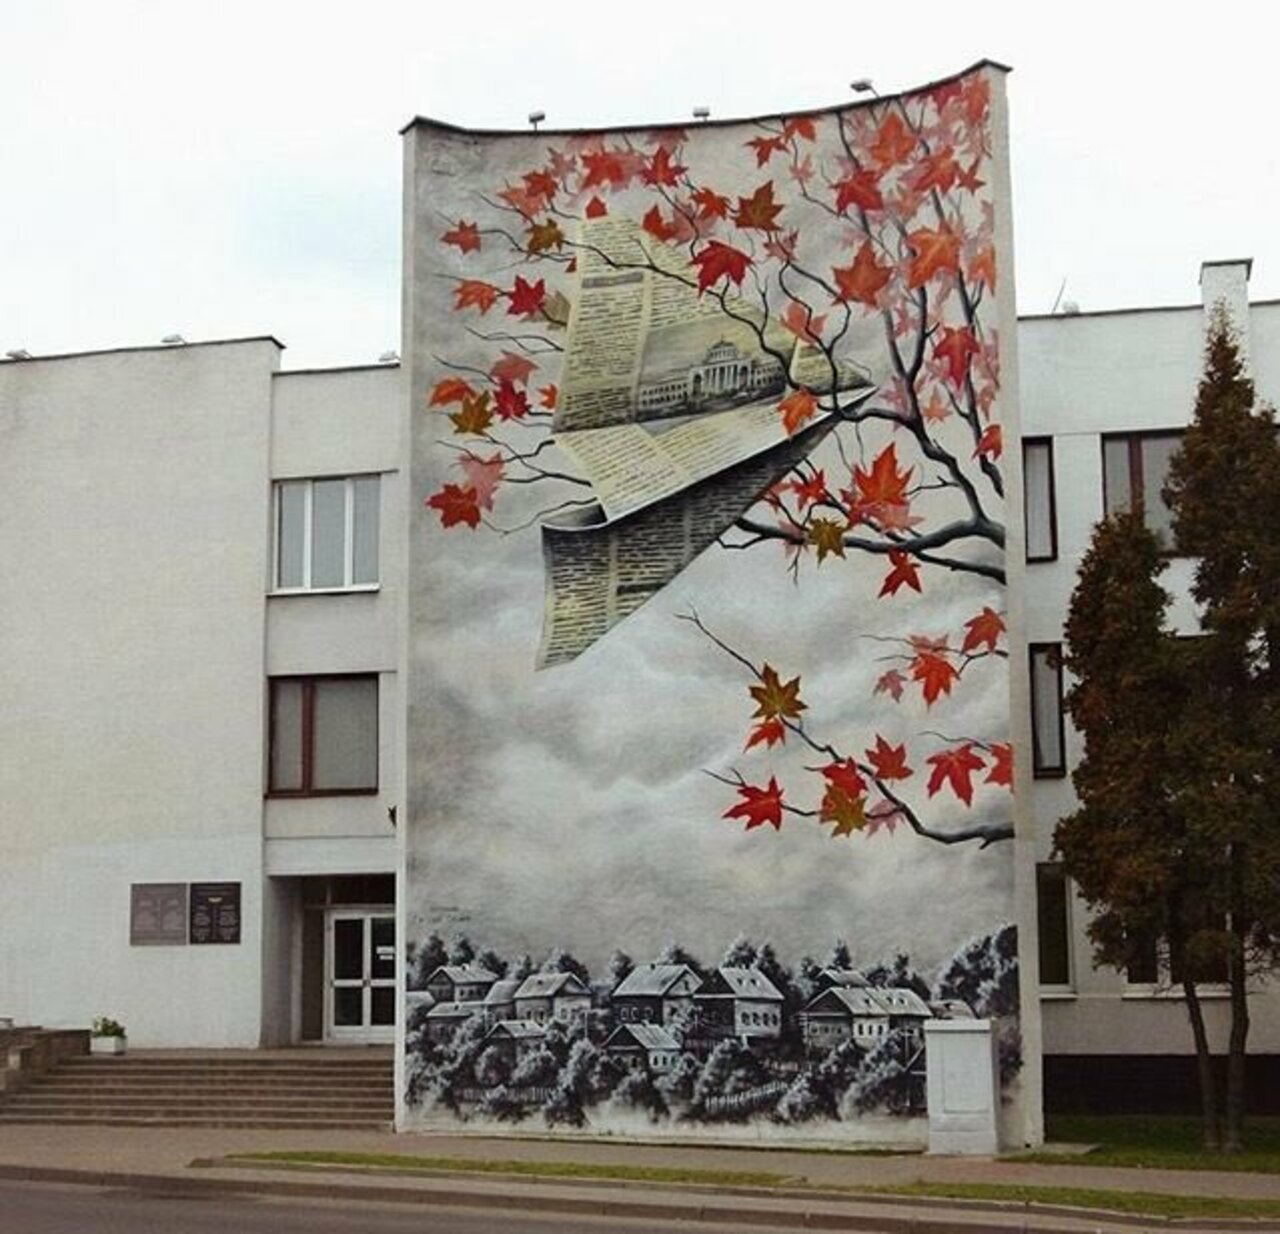 New Street Art by MUTUS in Belarus 

#art #graffiti #mural #streetart https://t.co/k42dEkJug3